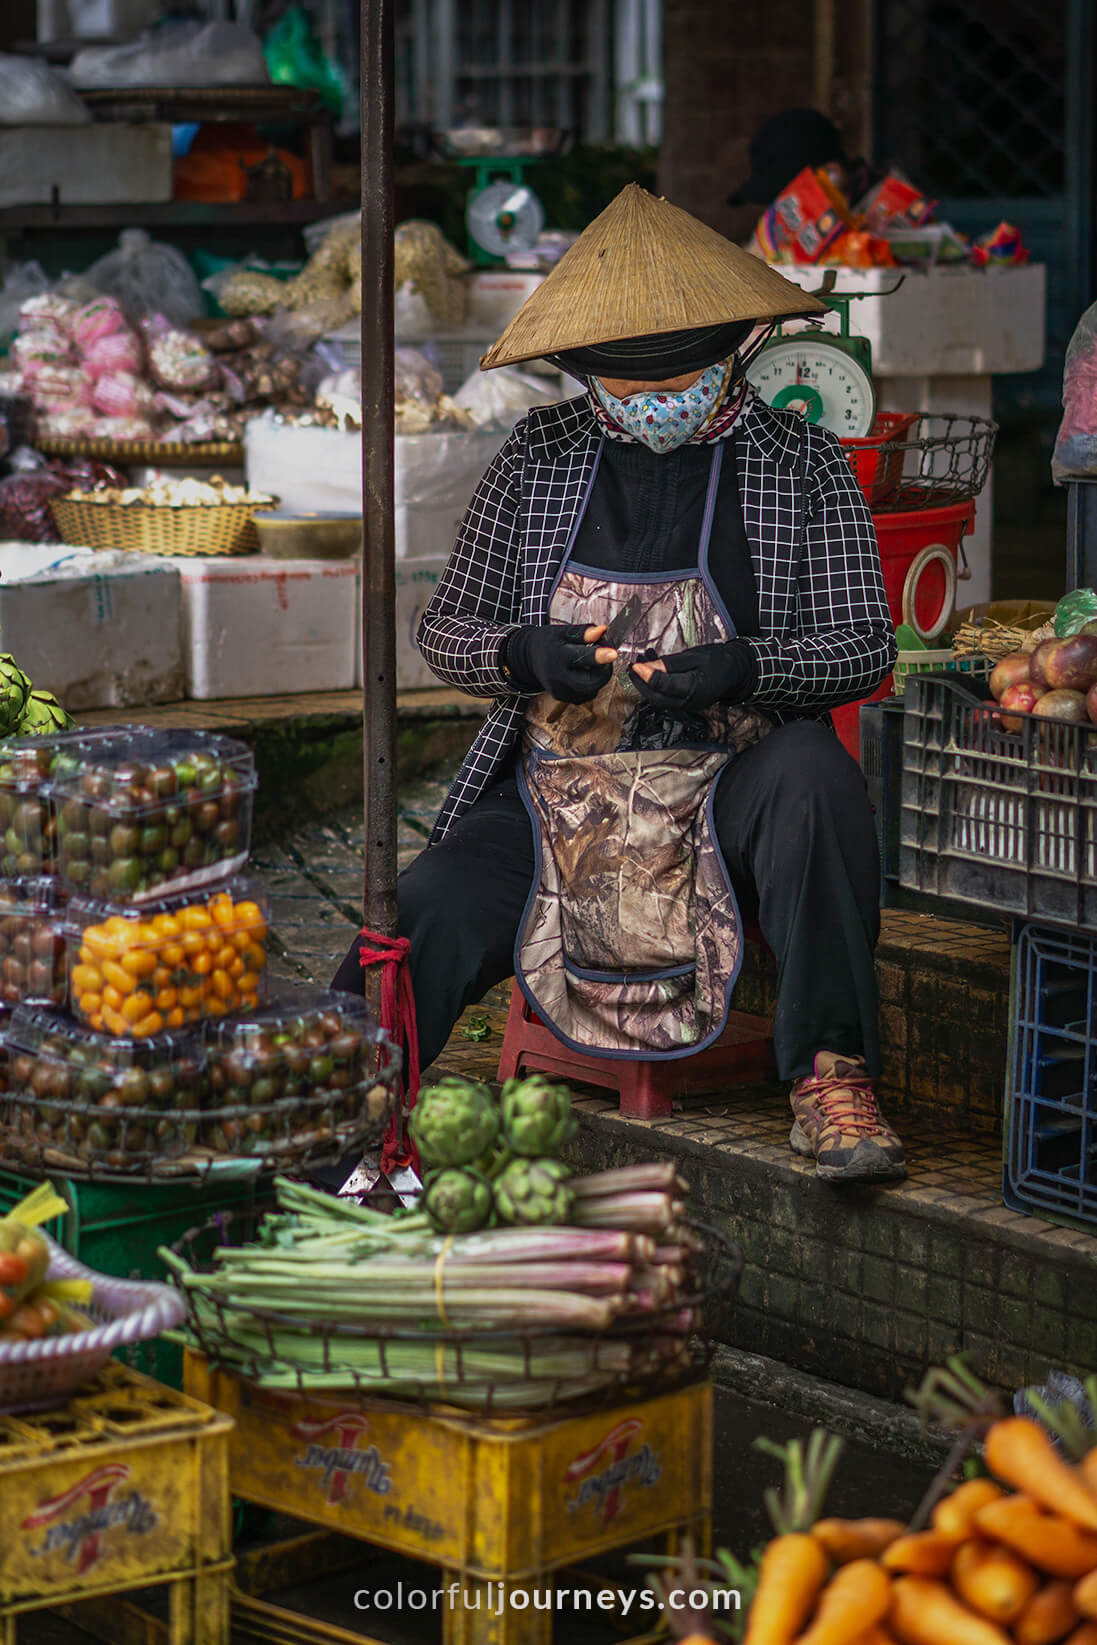 A woman sells goods at a market in Dalat, Vietnam.